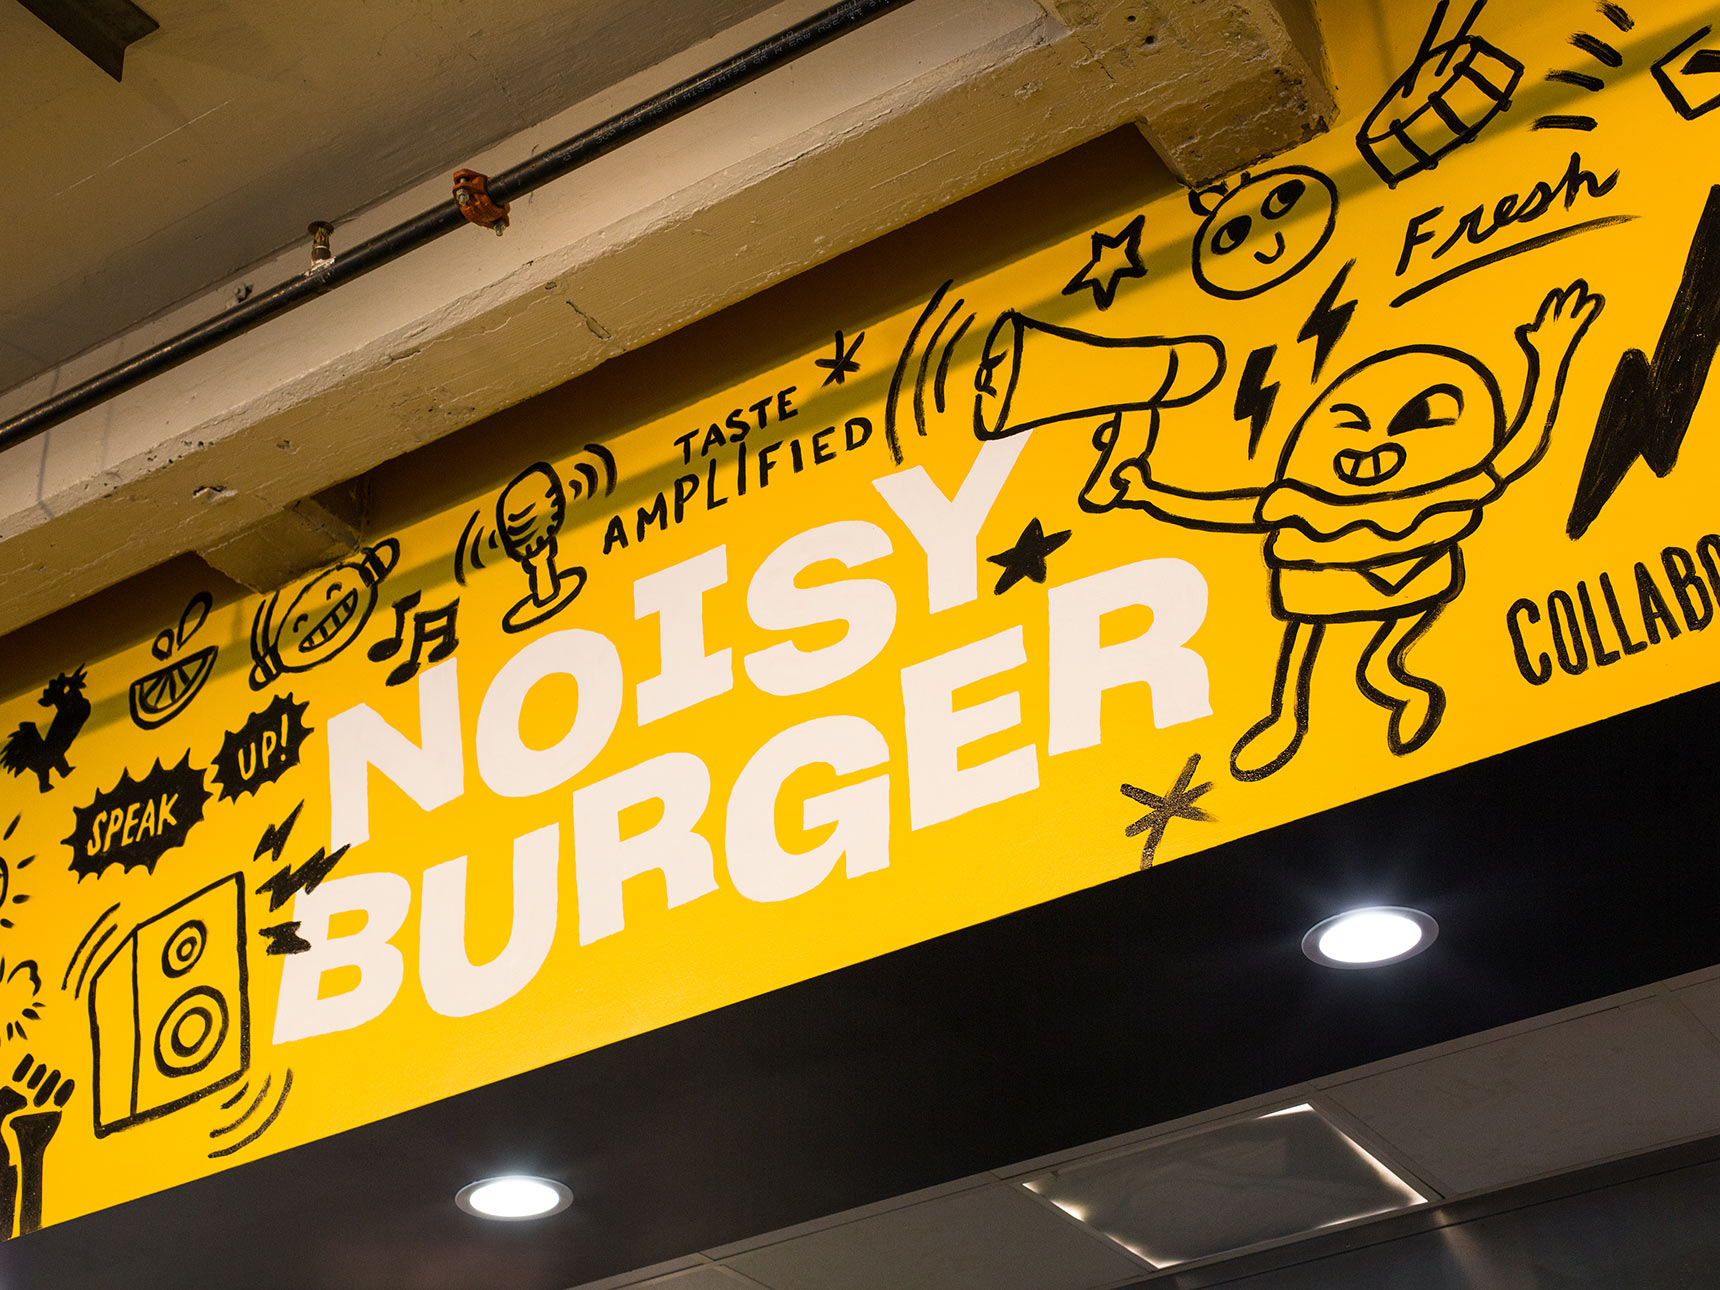 Noisy Burger – Public Mechanics / experiential design, public art,  placemaking, creative strategy